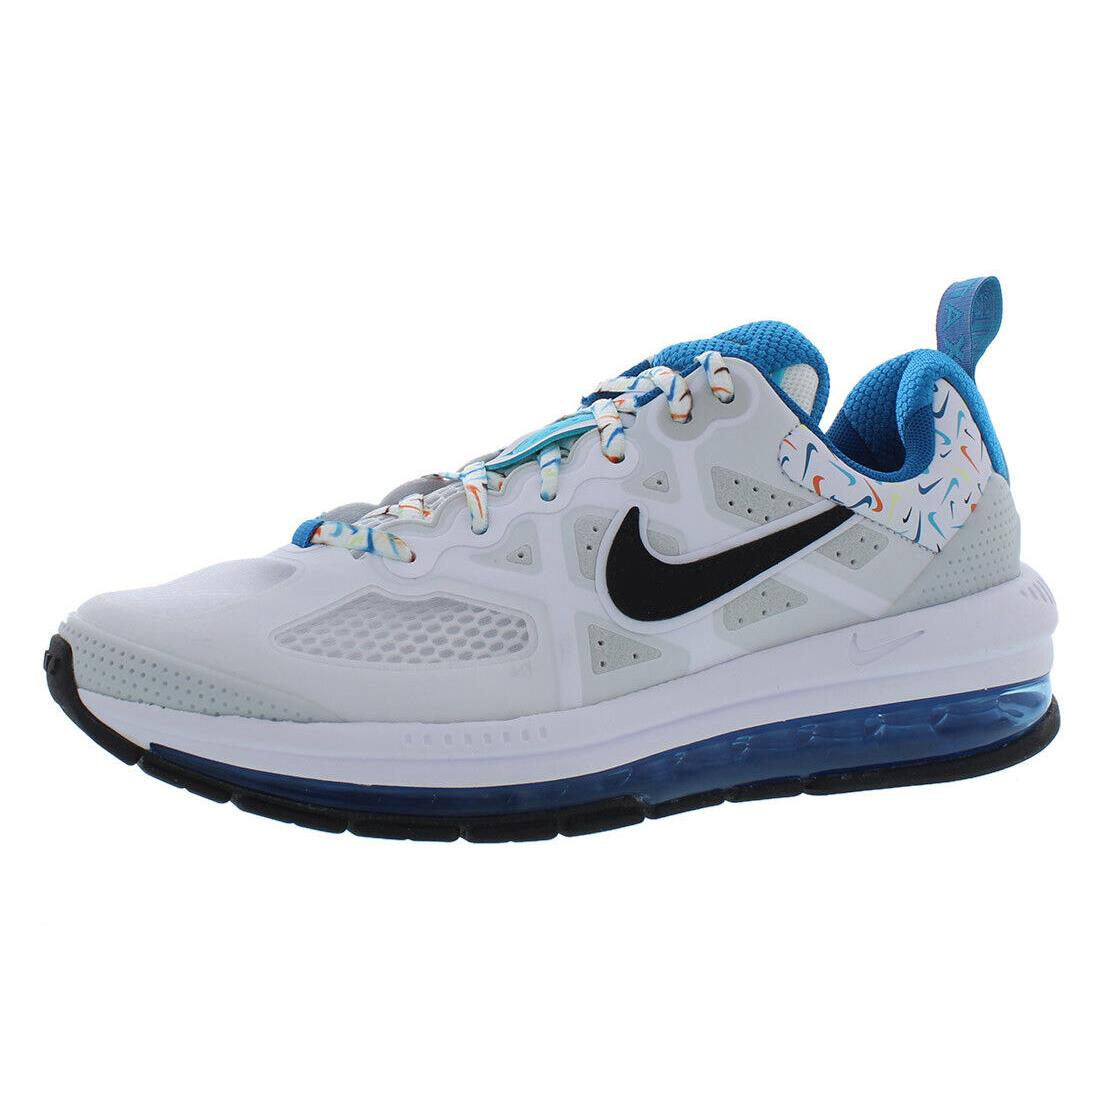 Nike Air Max Genome Boys Shoes - White/Blue, Main: White